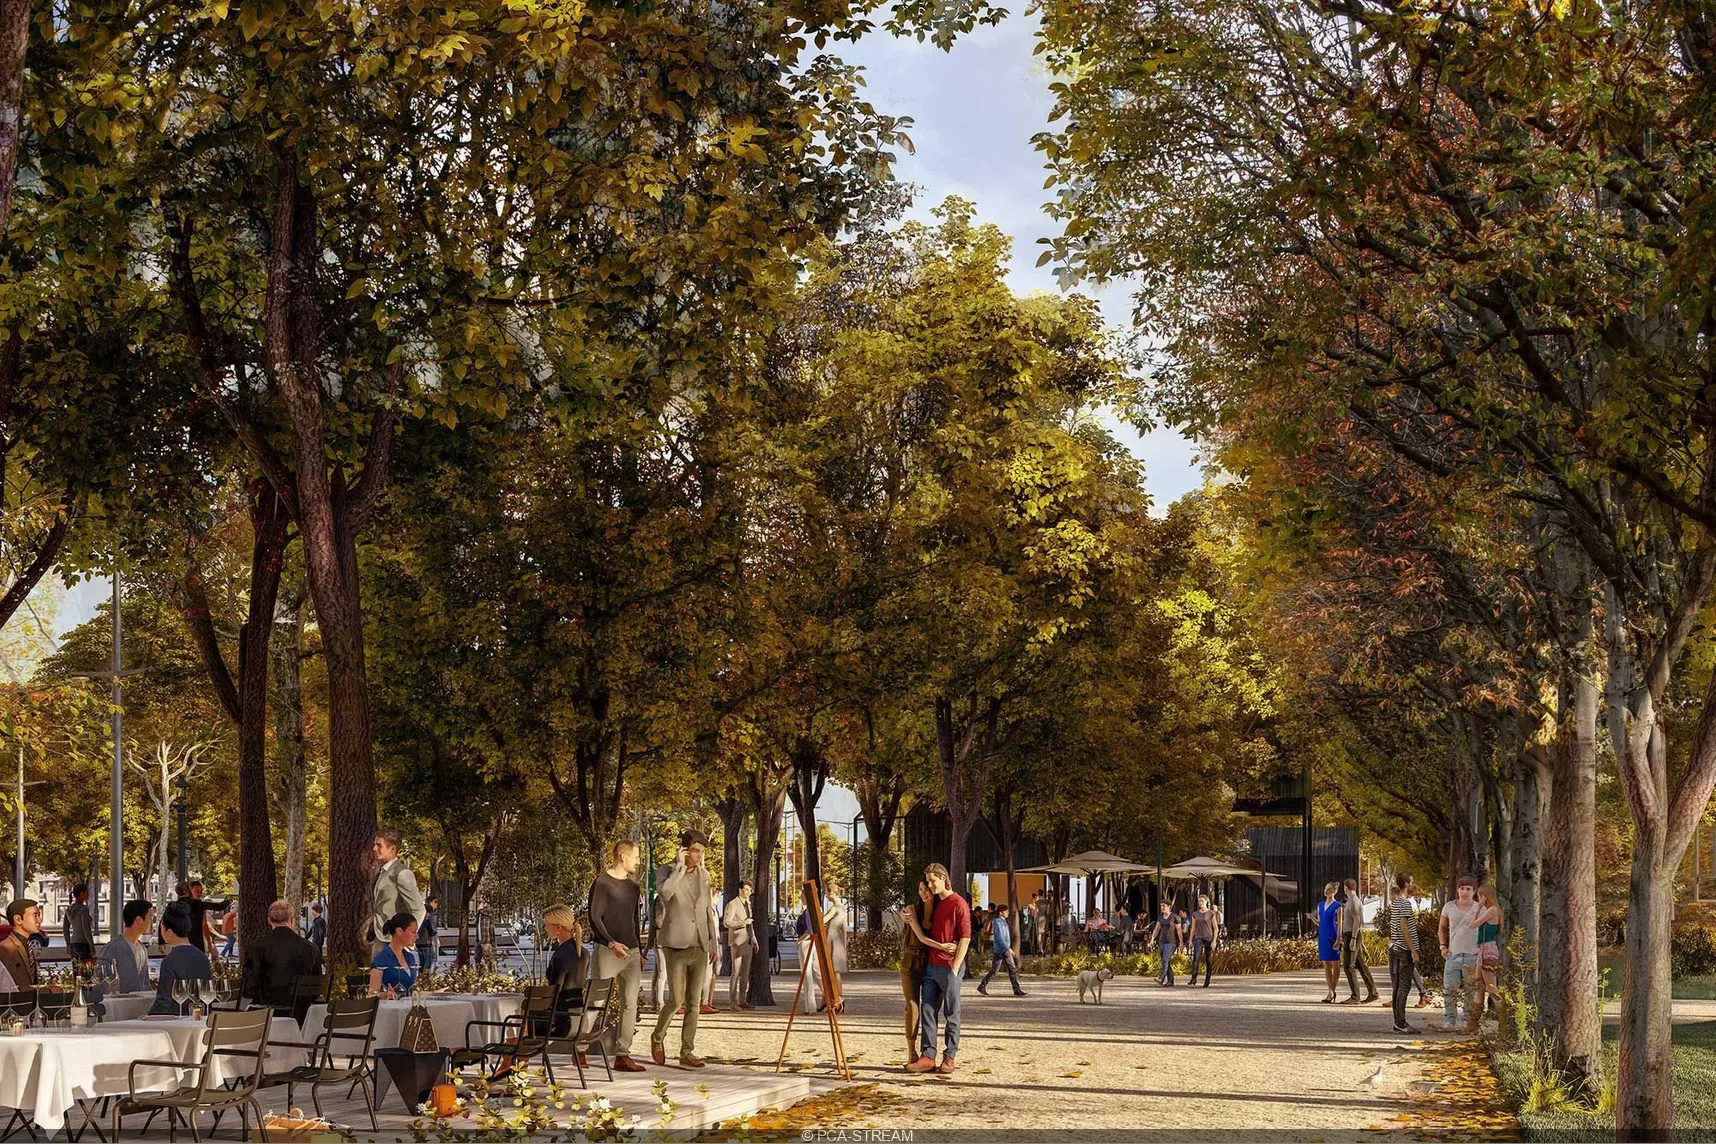 Paris Approves Plan to Transform Champs-Élysées Into Urban Oasis After 2024  Olympics